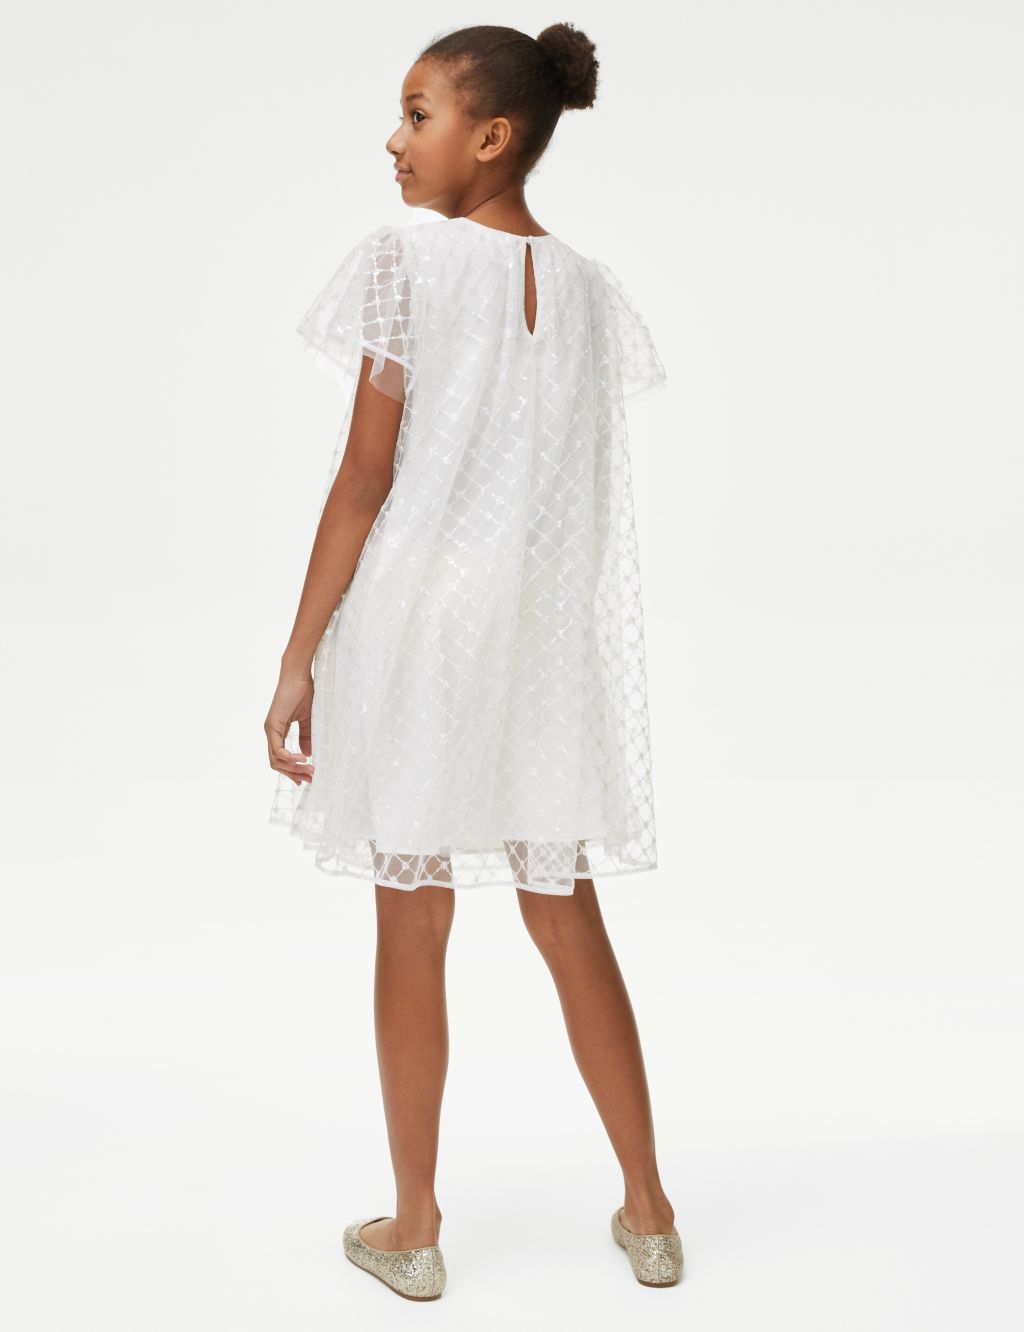 Patterned Sequin Dress (7-16 Yrs) image 5